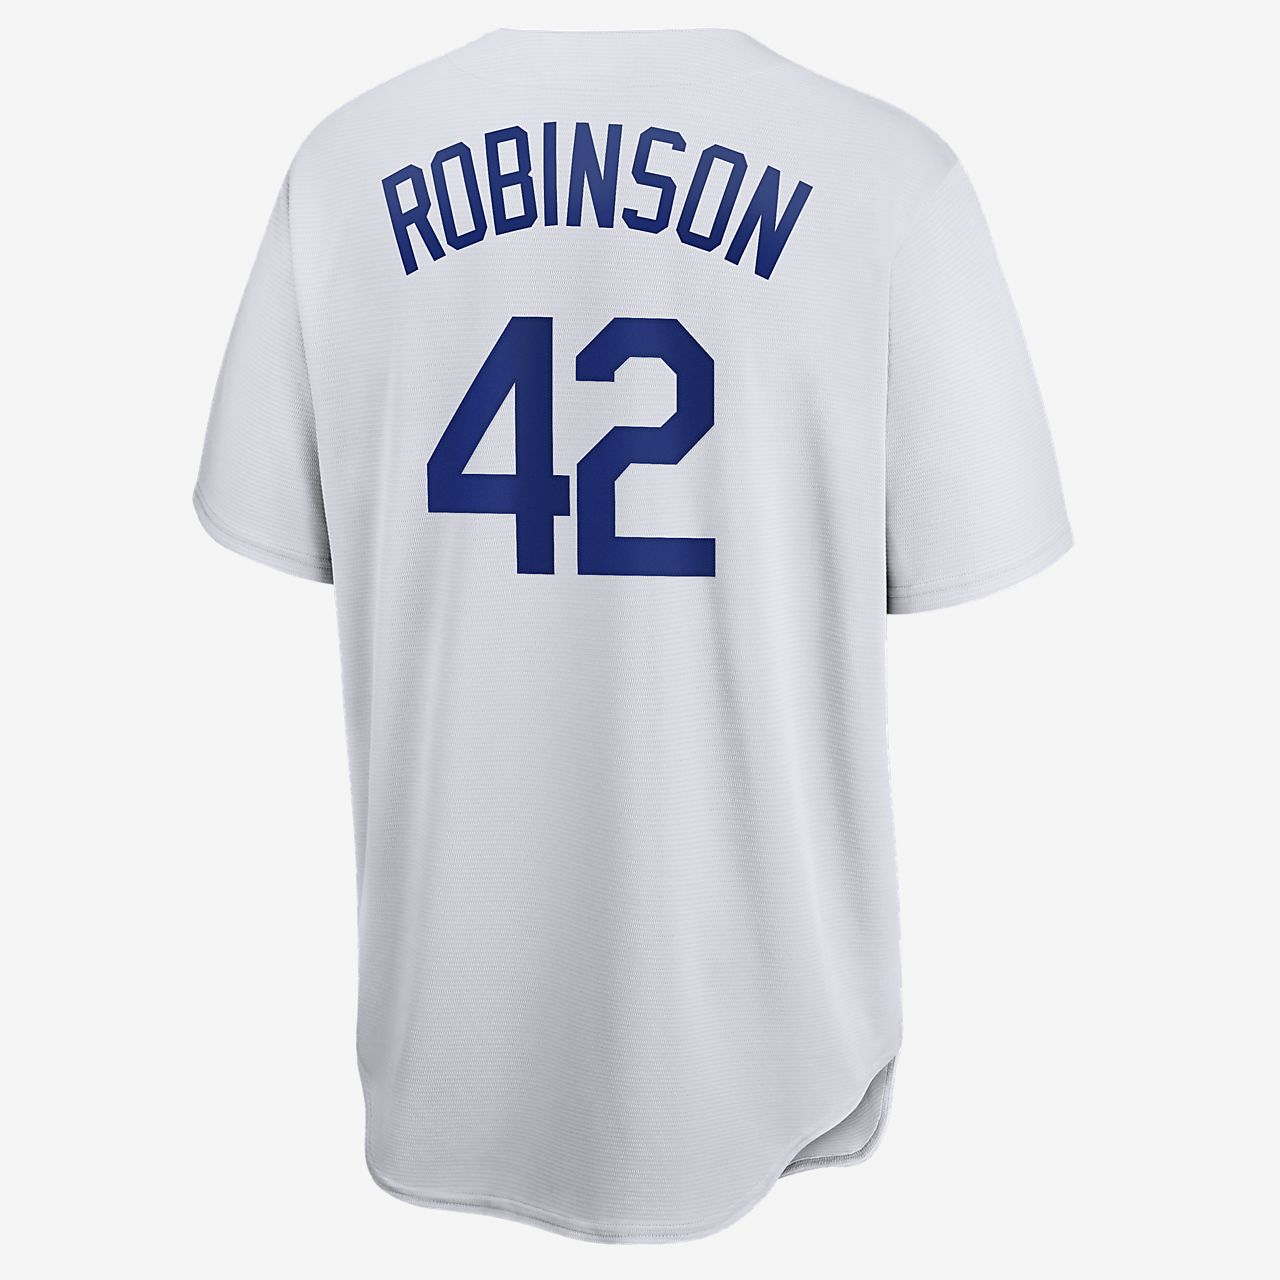 jackie robinson baseball shirt